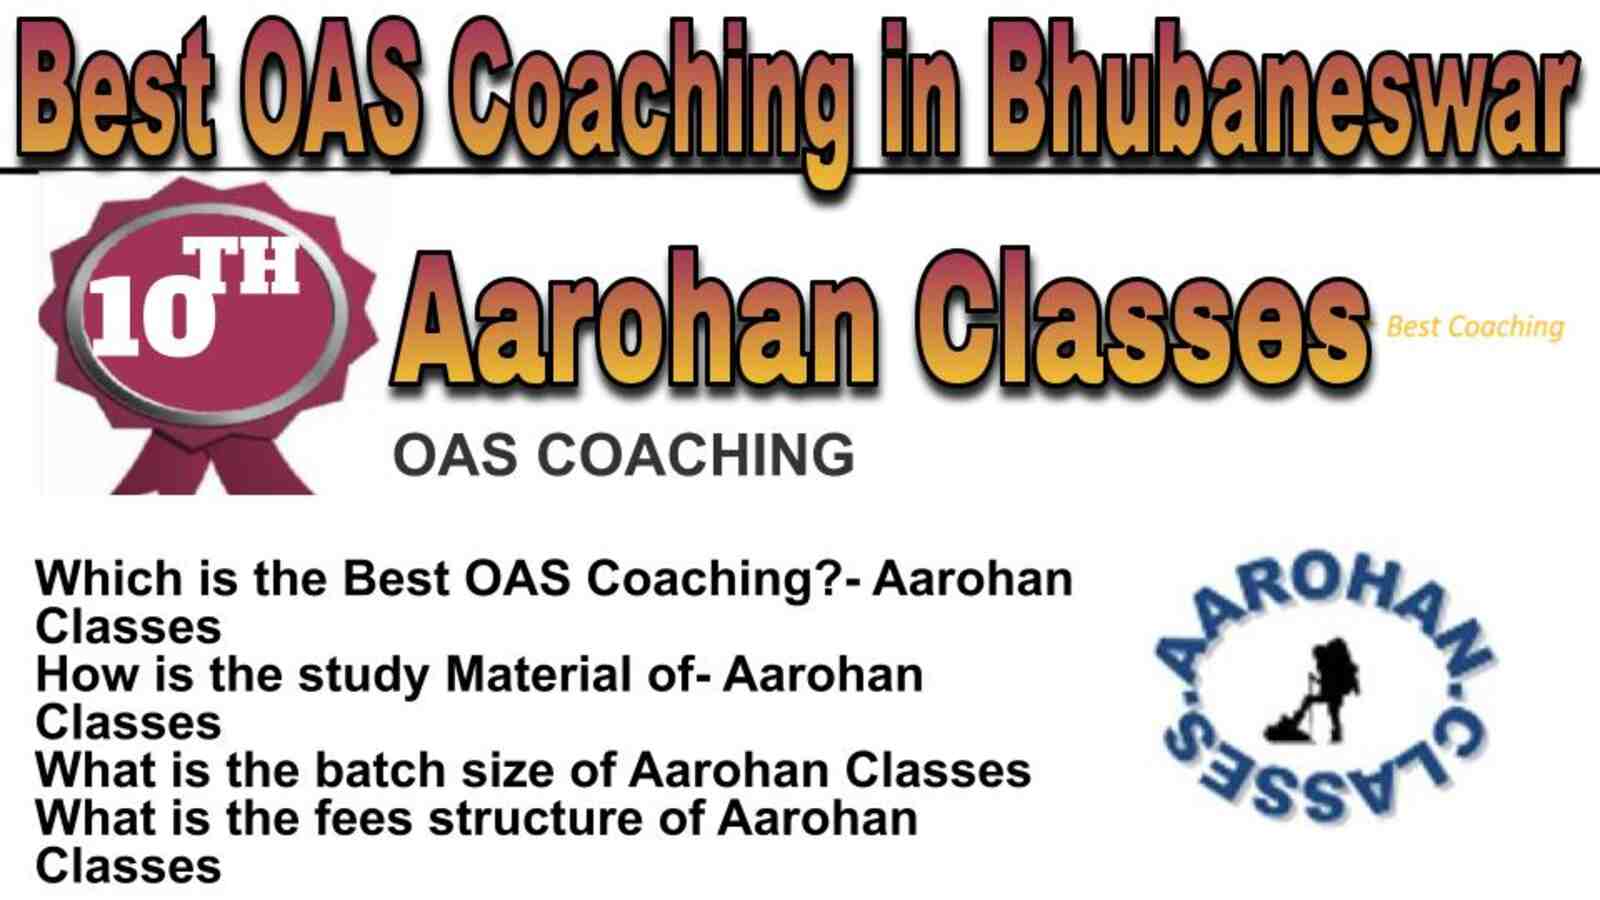 Rank 10 best OAS coaching in Bhubaneswar